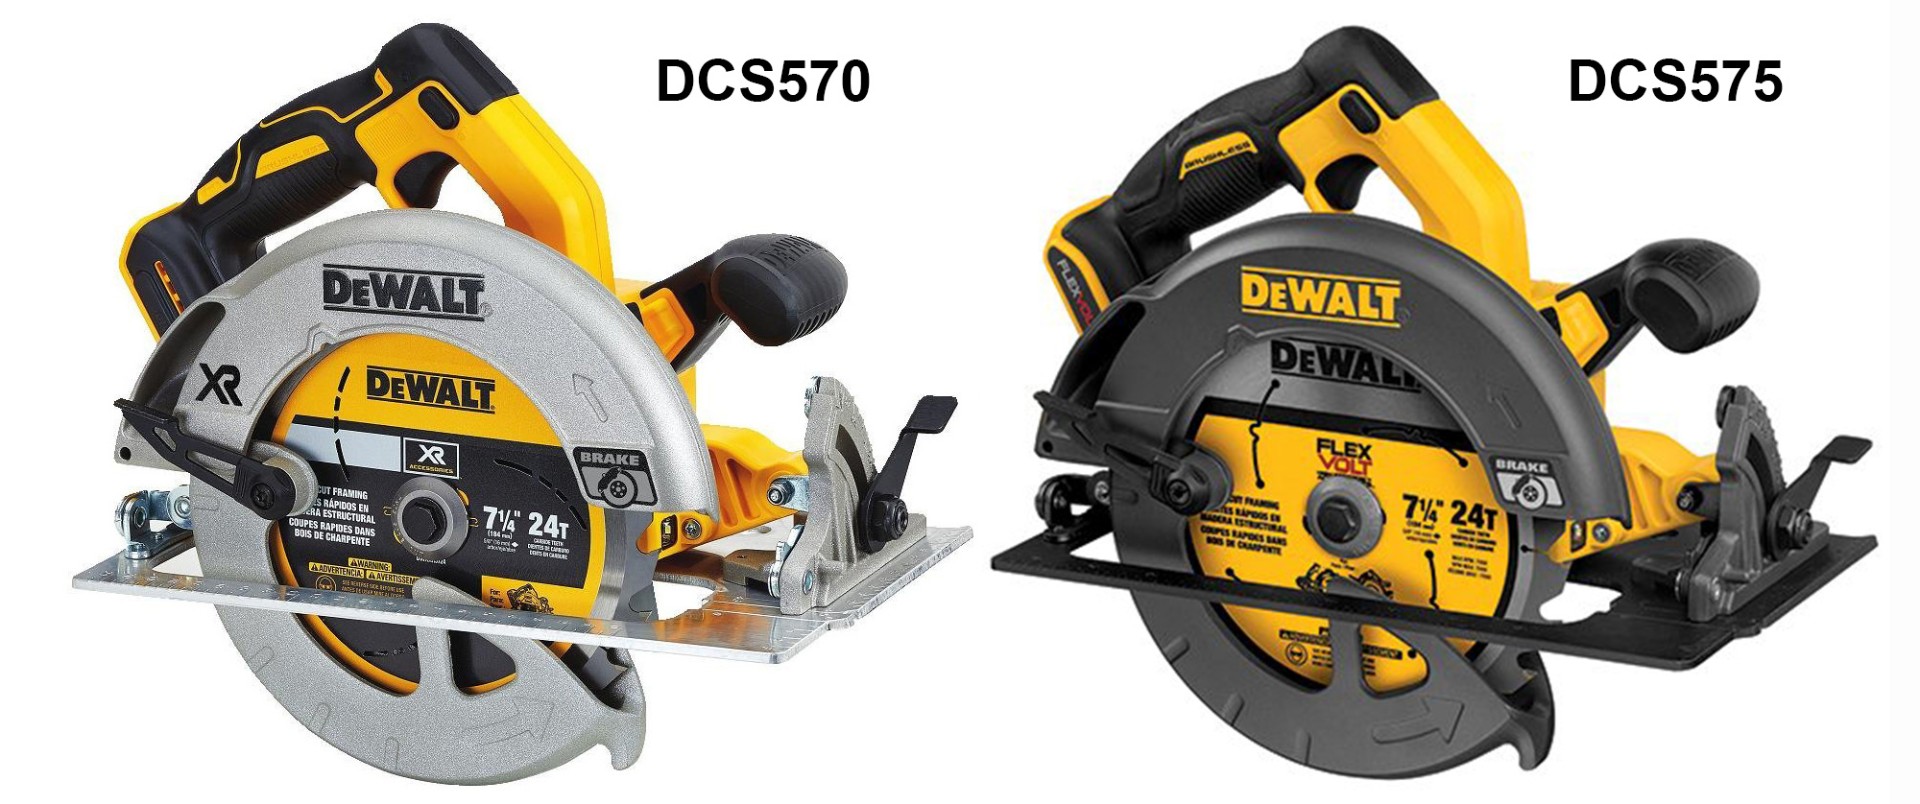 DeWalt DCS570 vs DCS575